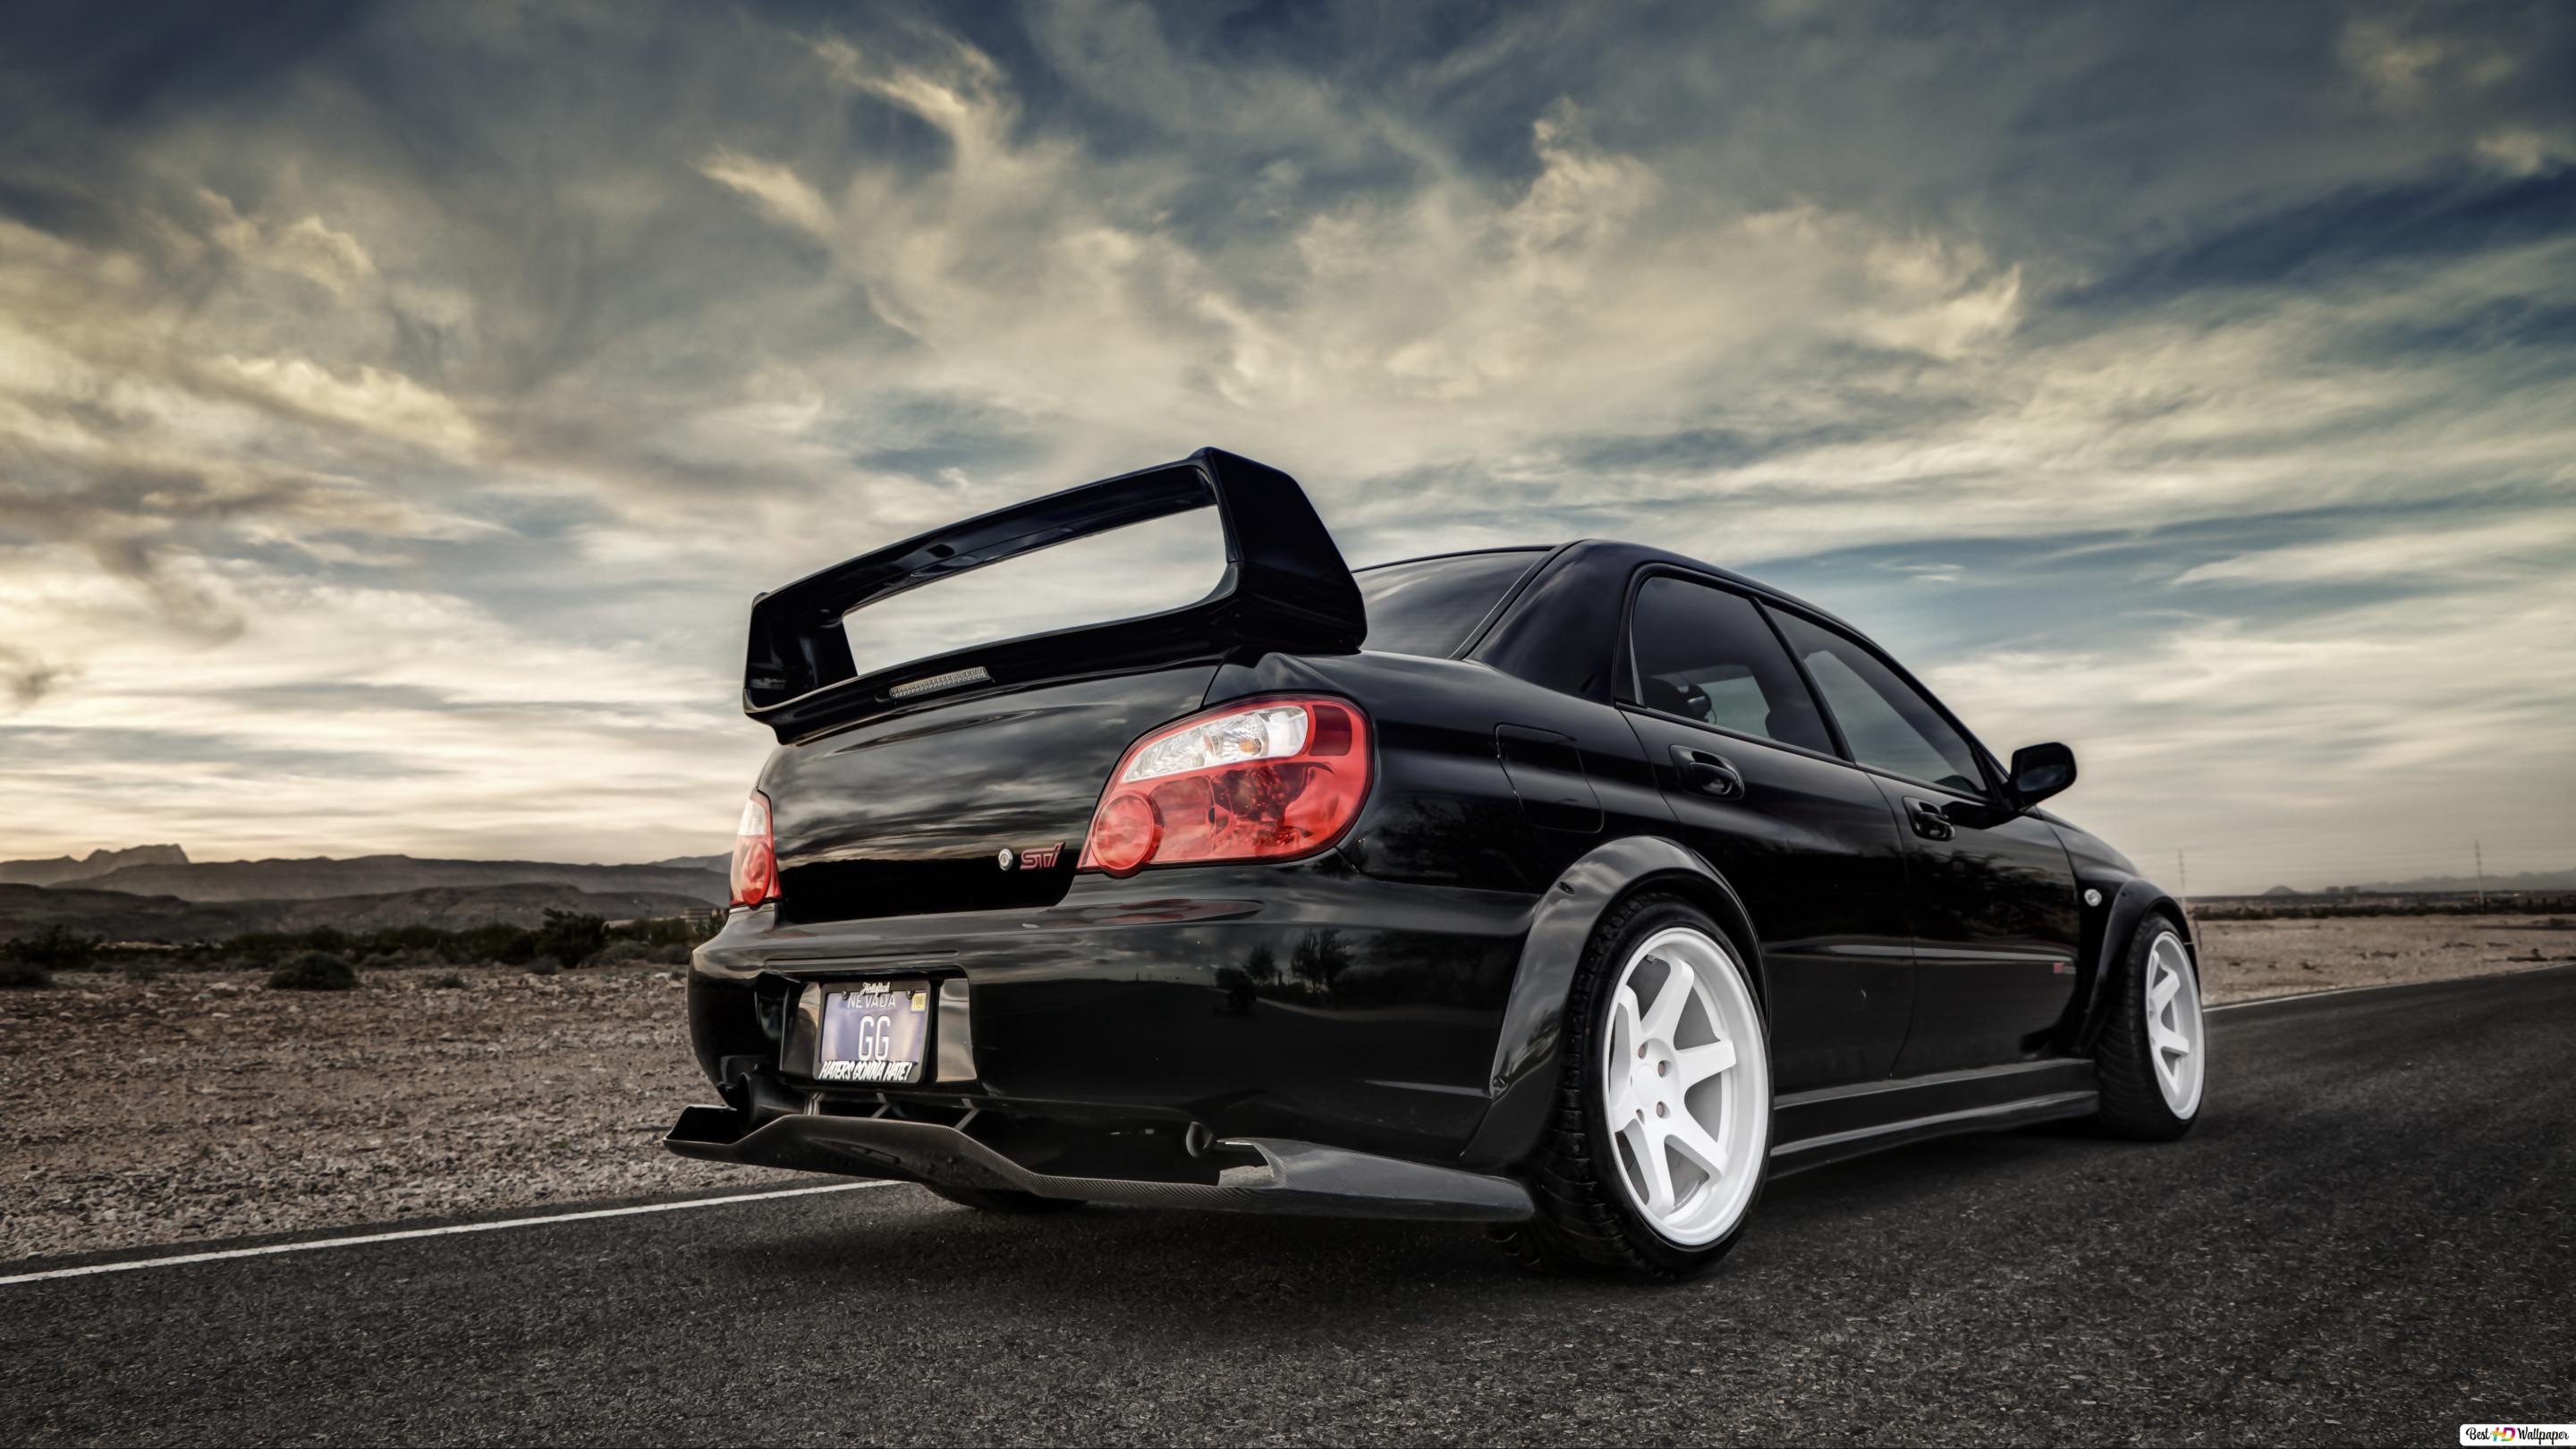 Black Subaru HD wallpaper download